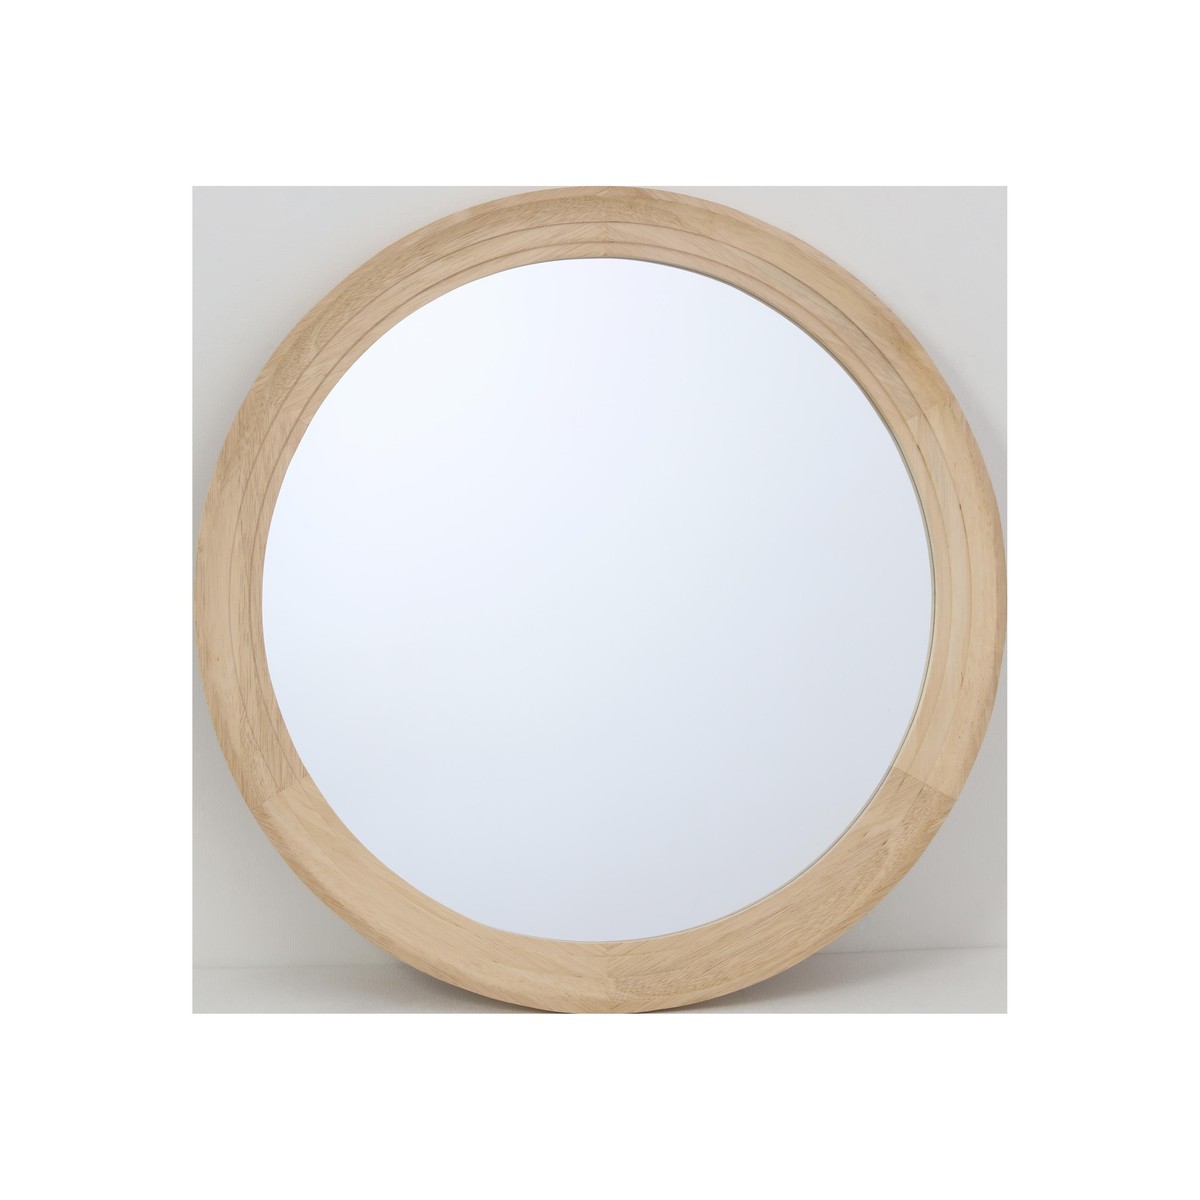   Miroir rond bois clair 76cm  Diam 76cm